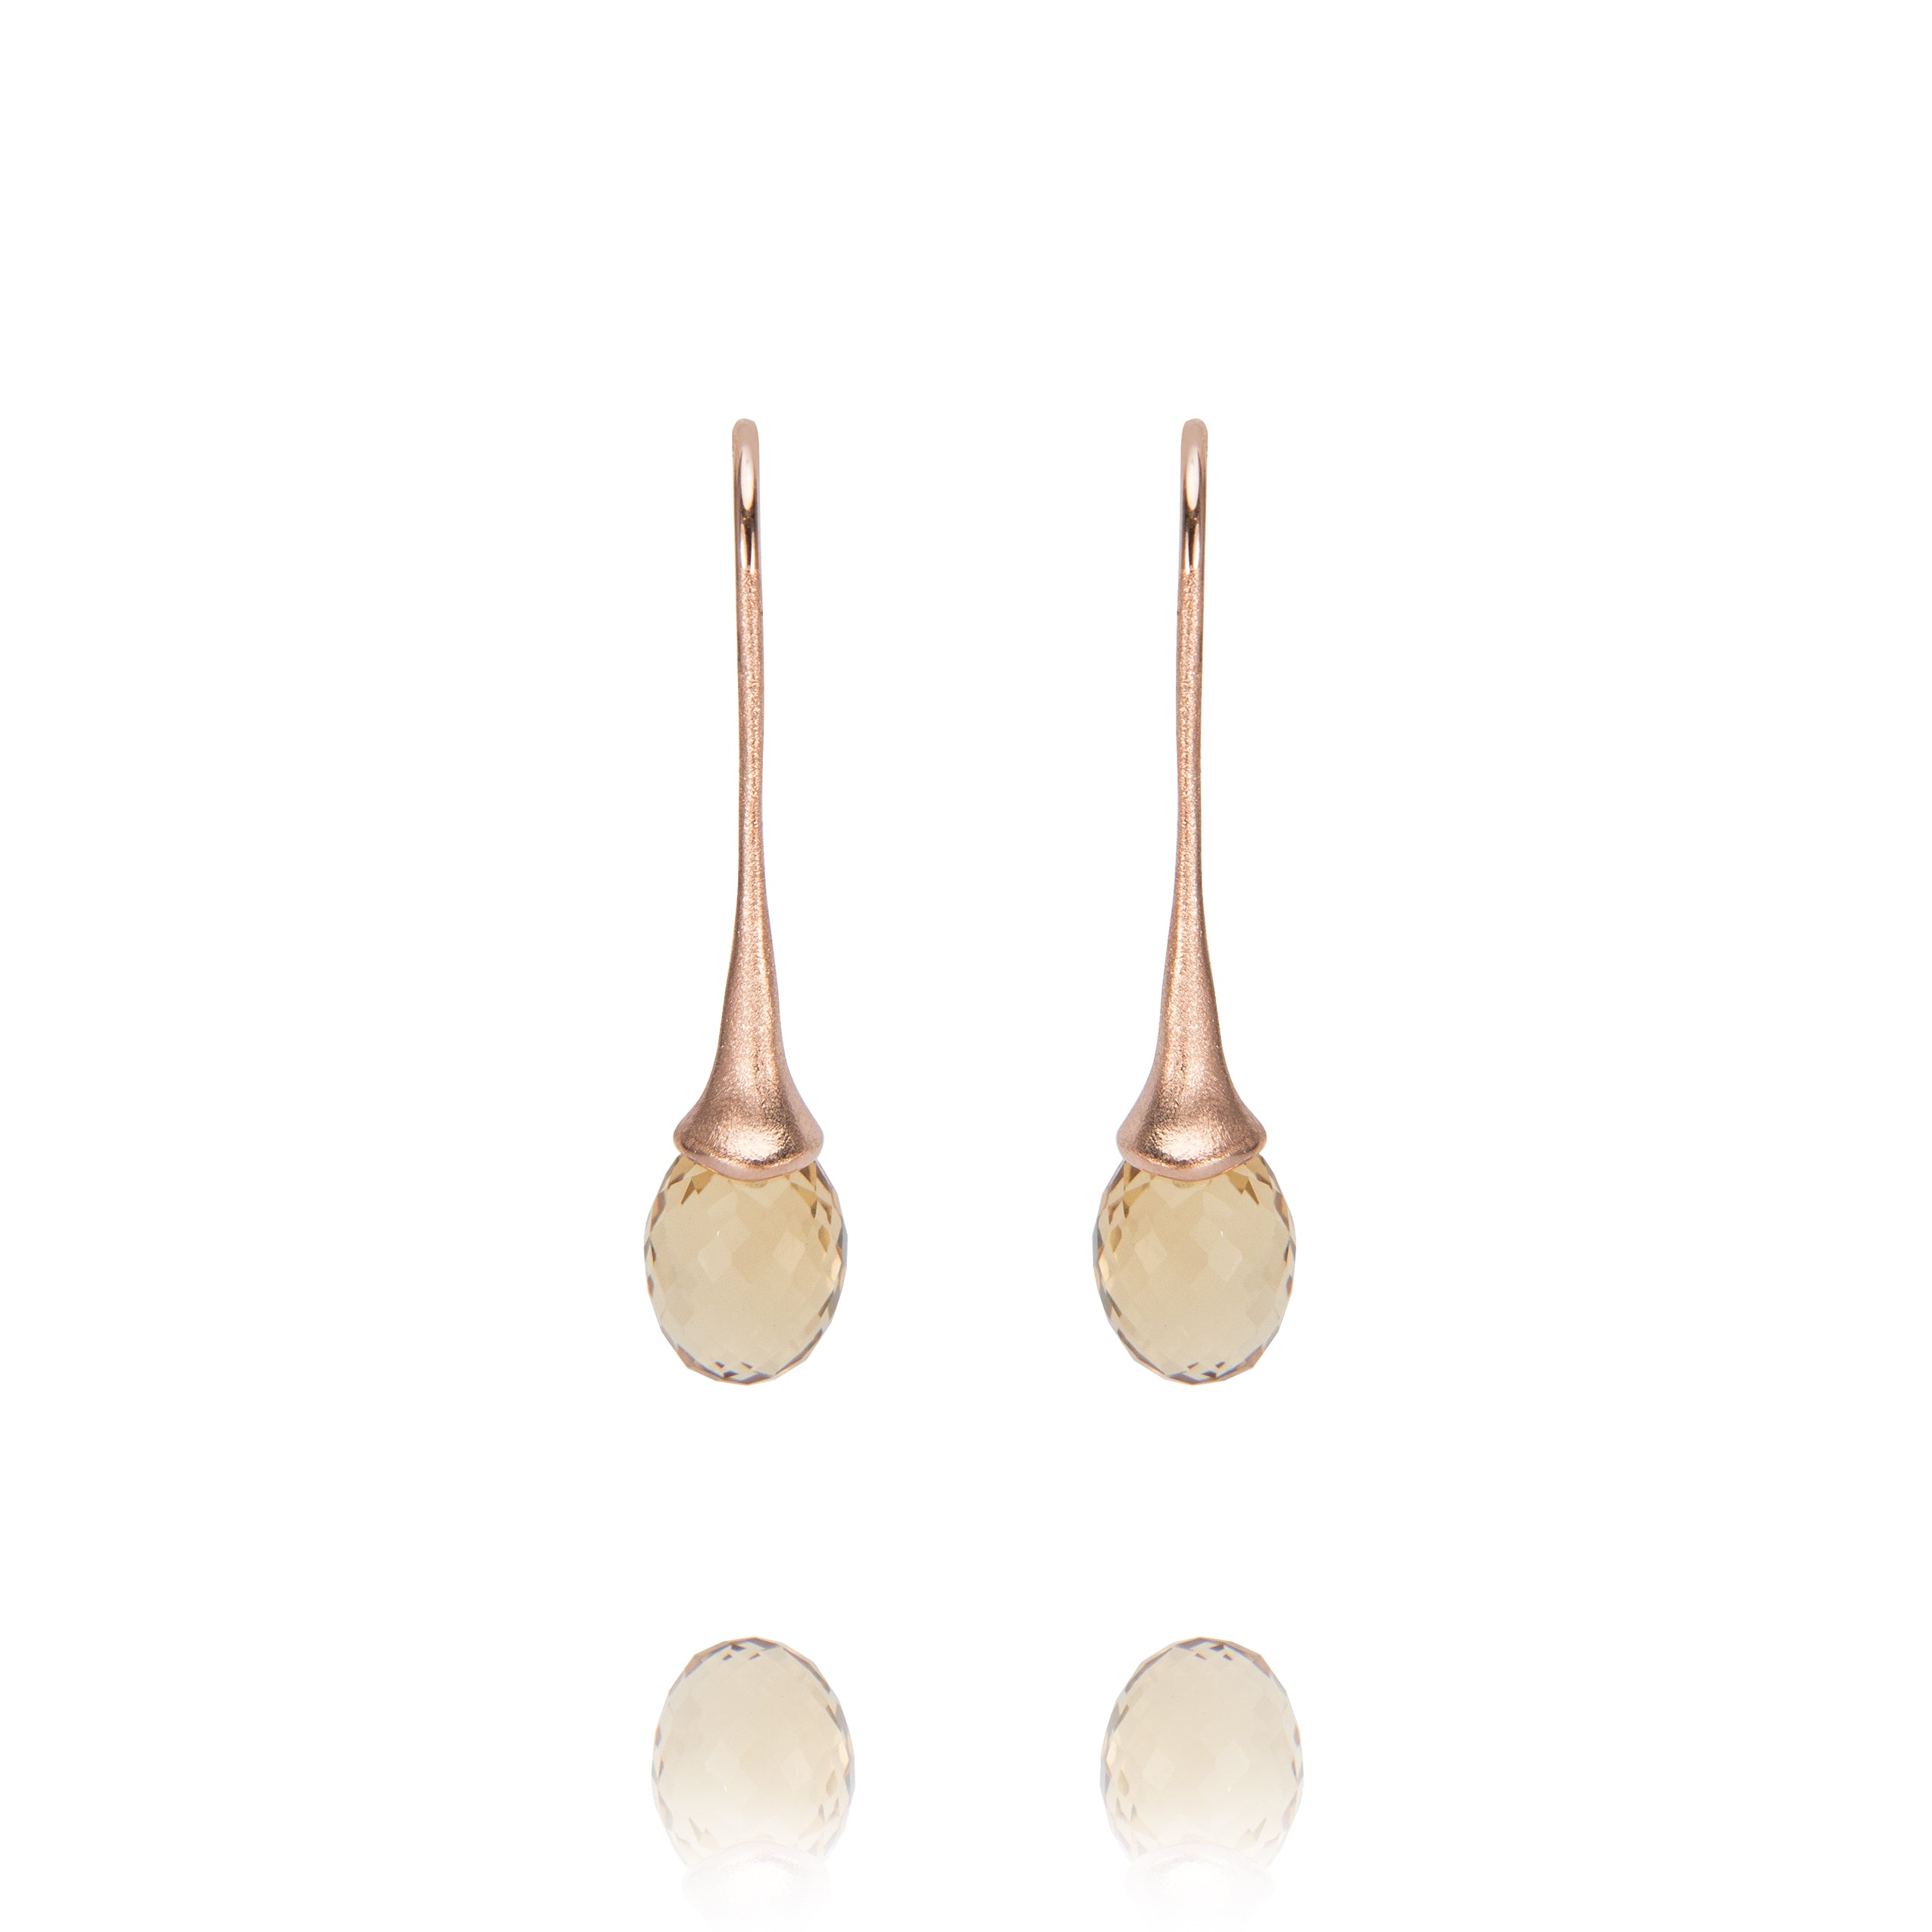 Olivia earrings "Champagne Quartz" 925/-